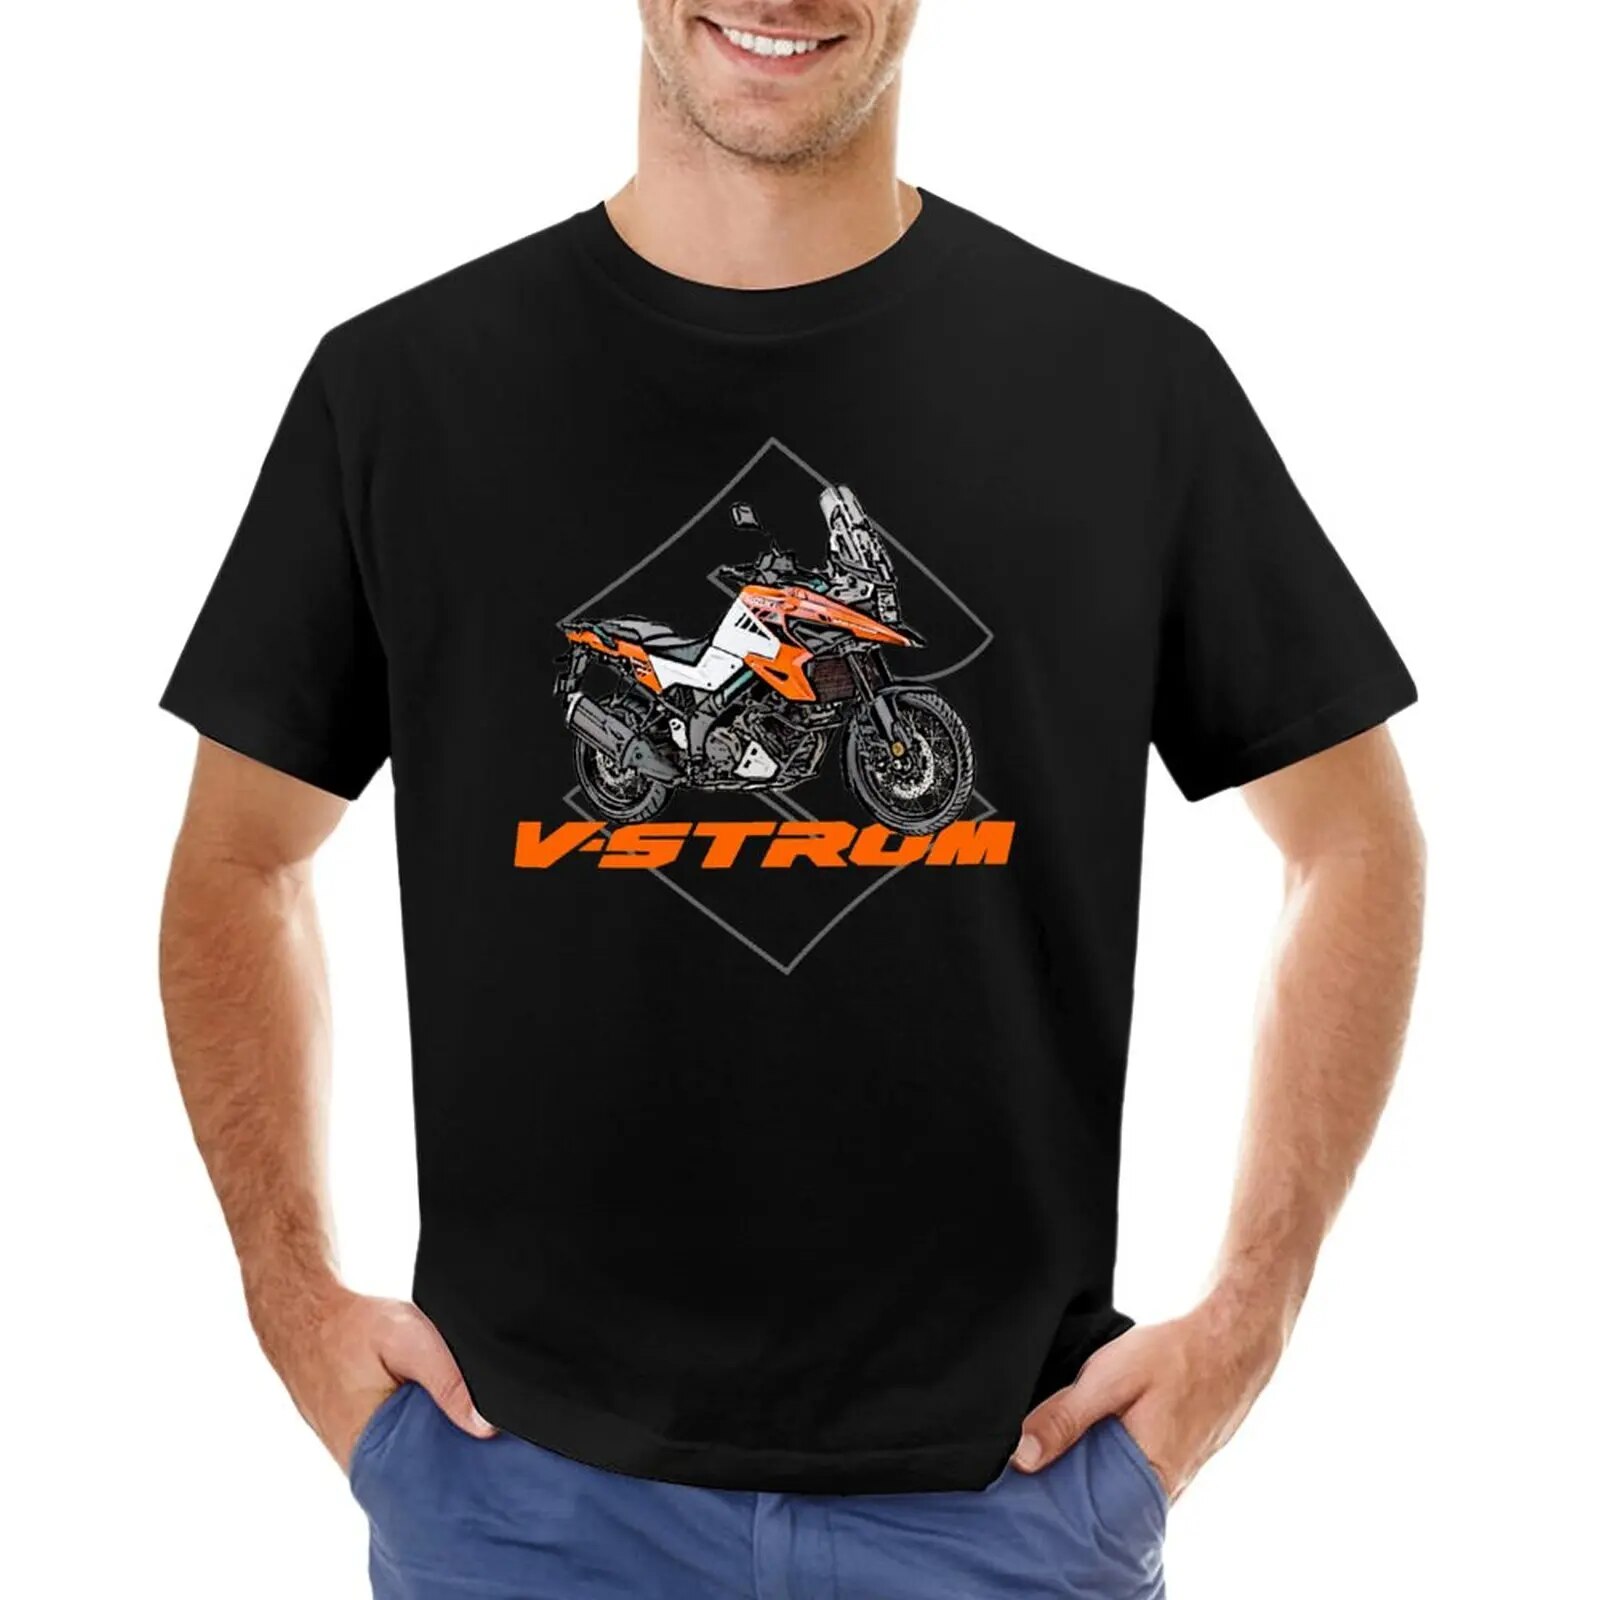 VSTROM 1050 DRAWING T-Shirt tees plus size tops quick drying t-shirt boys animal print shirt mens vintage t shirts